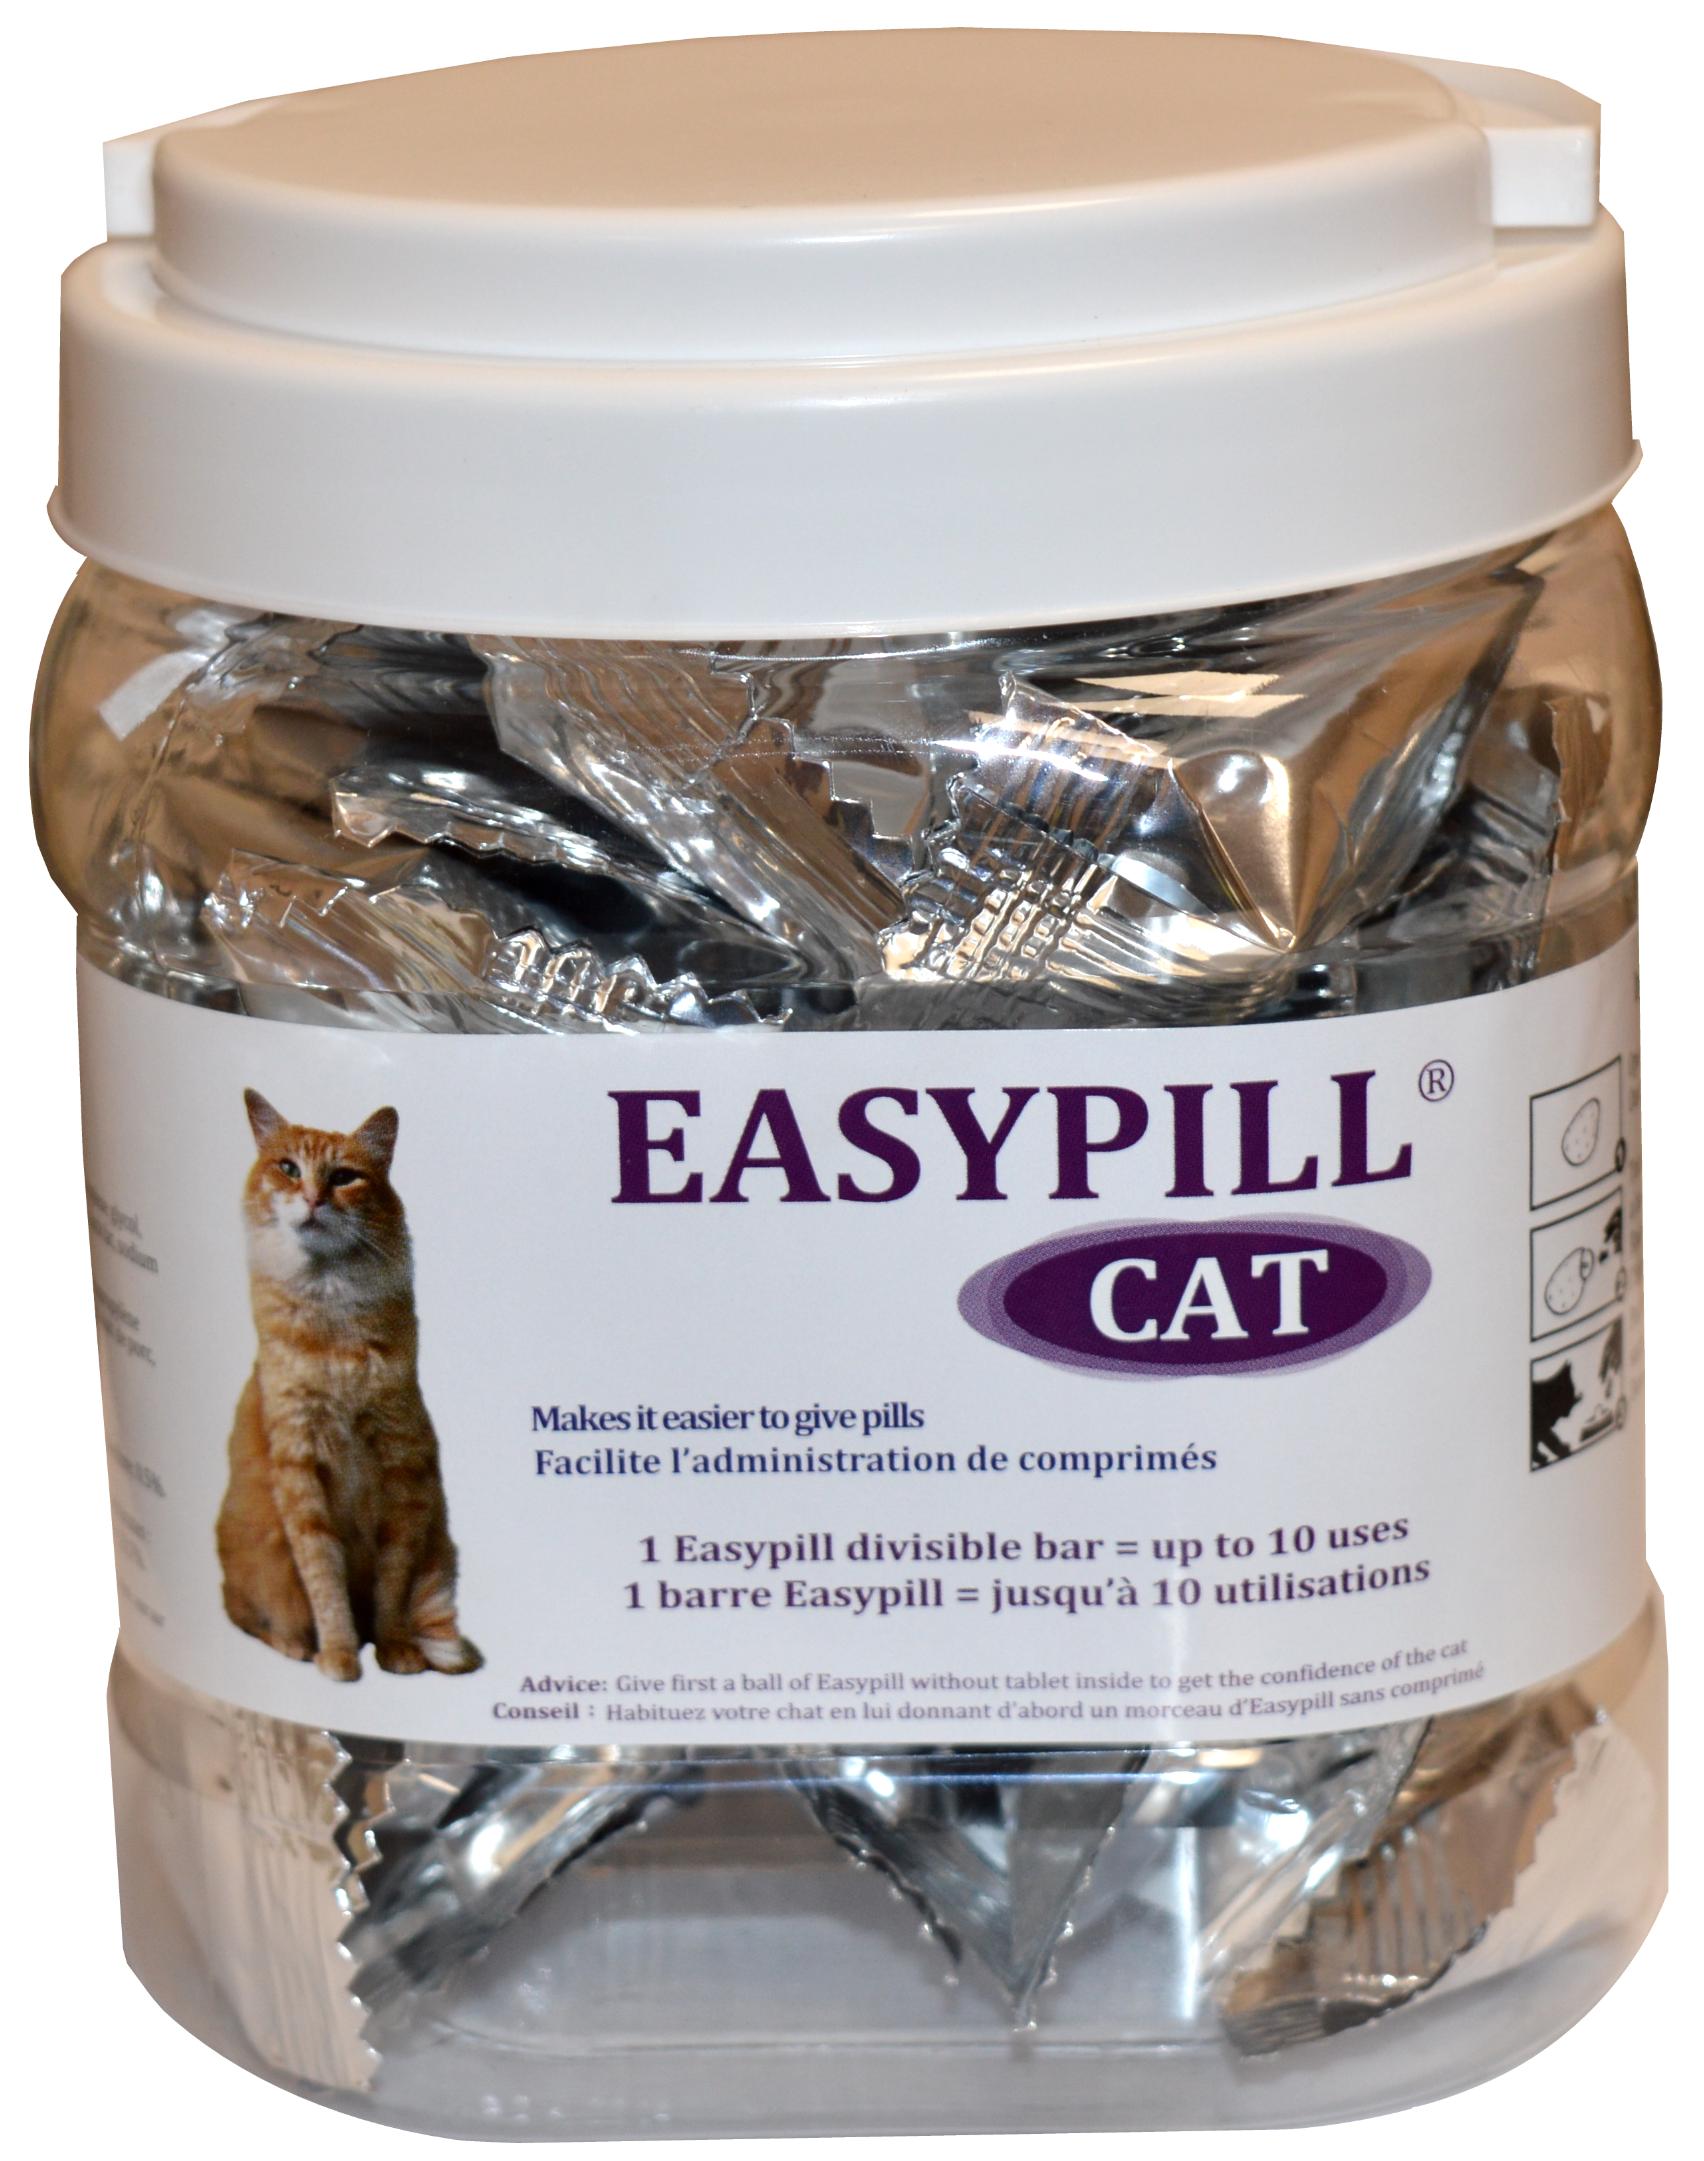 EASYPILL CAT PILL PUTTY 10G – TUB